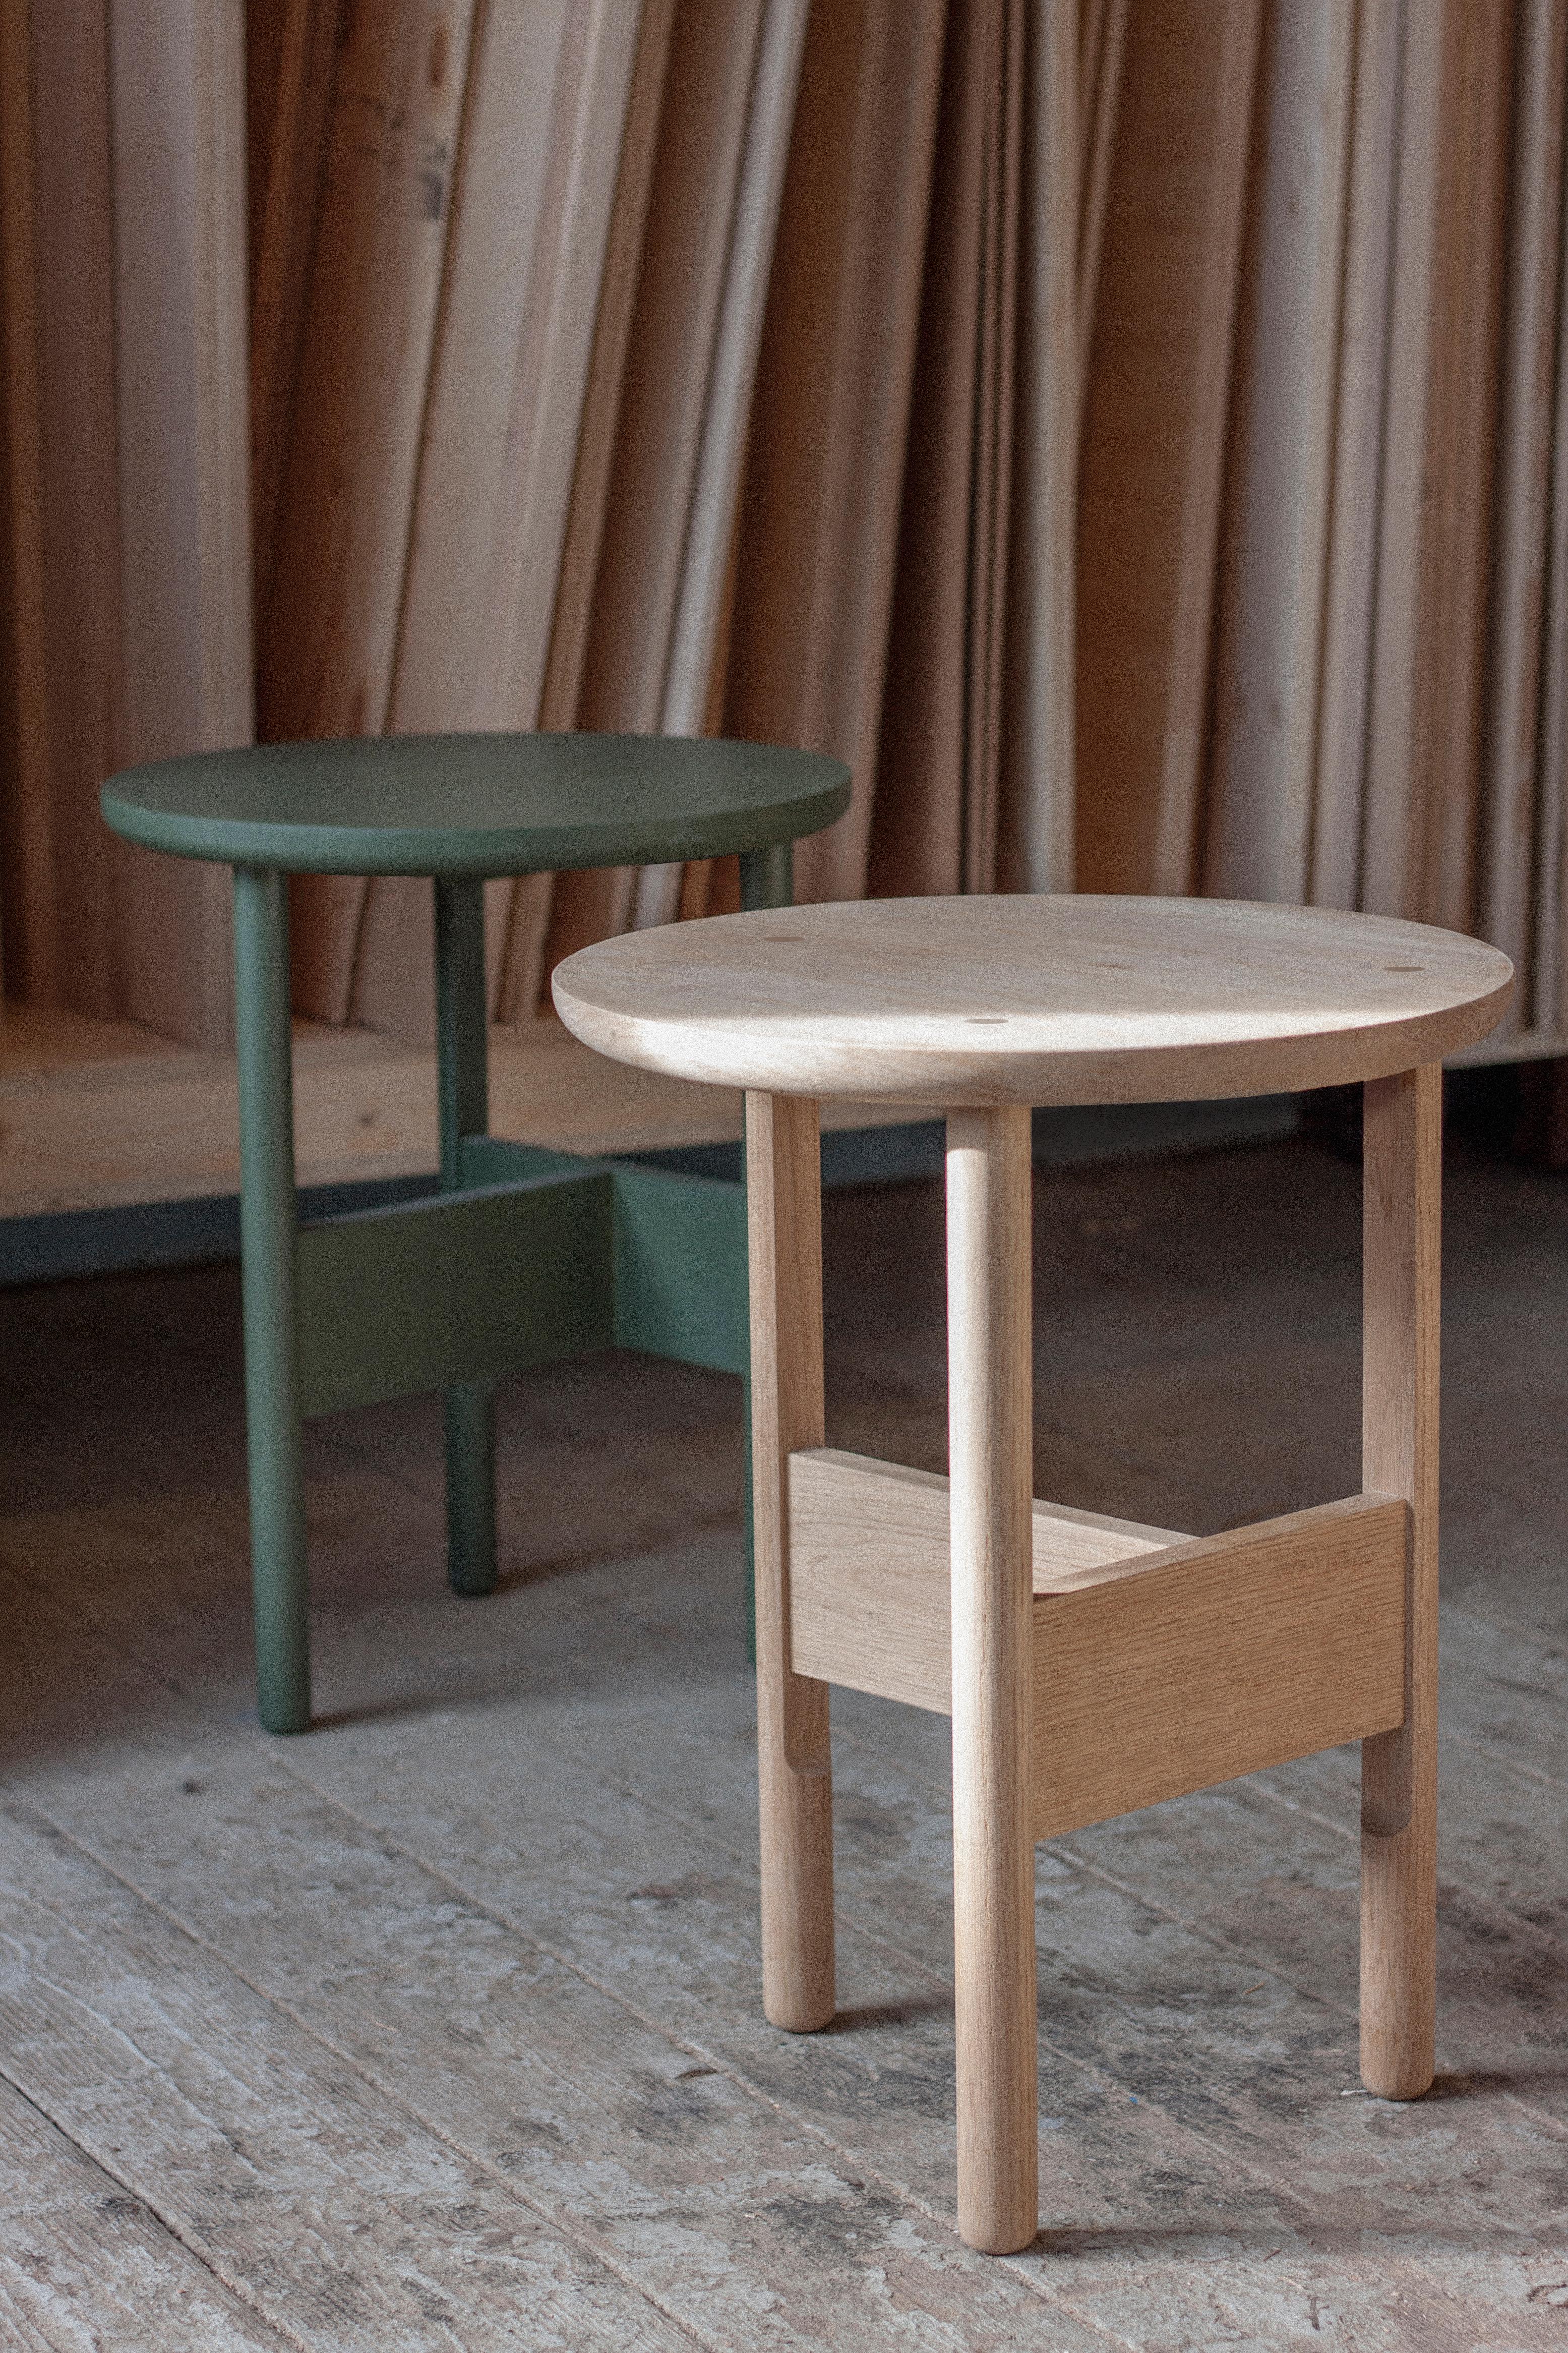 Danish Handmade Hanne Side Table, Ø45cm - Painted - by BACD studio For Sale